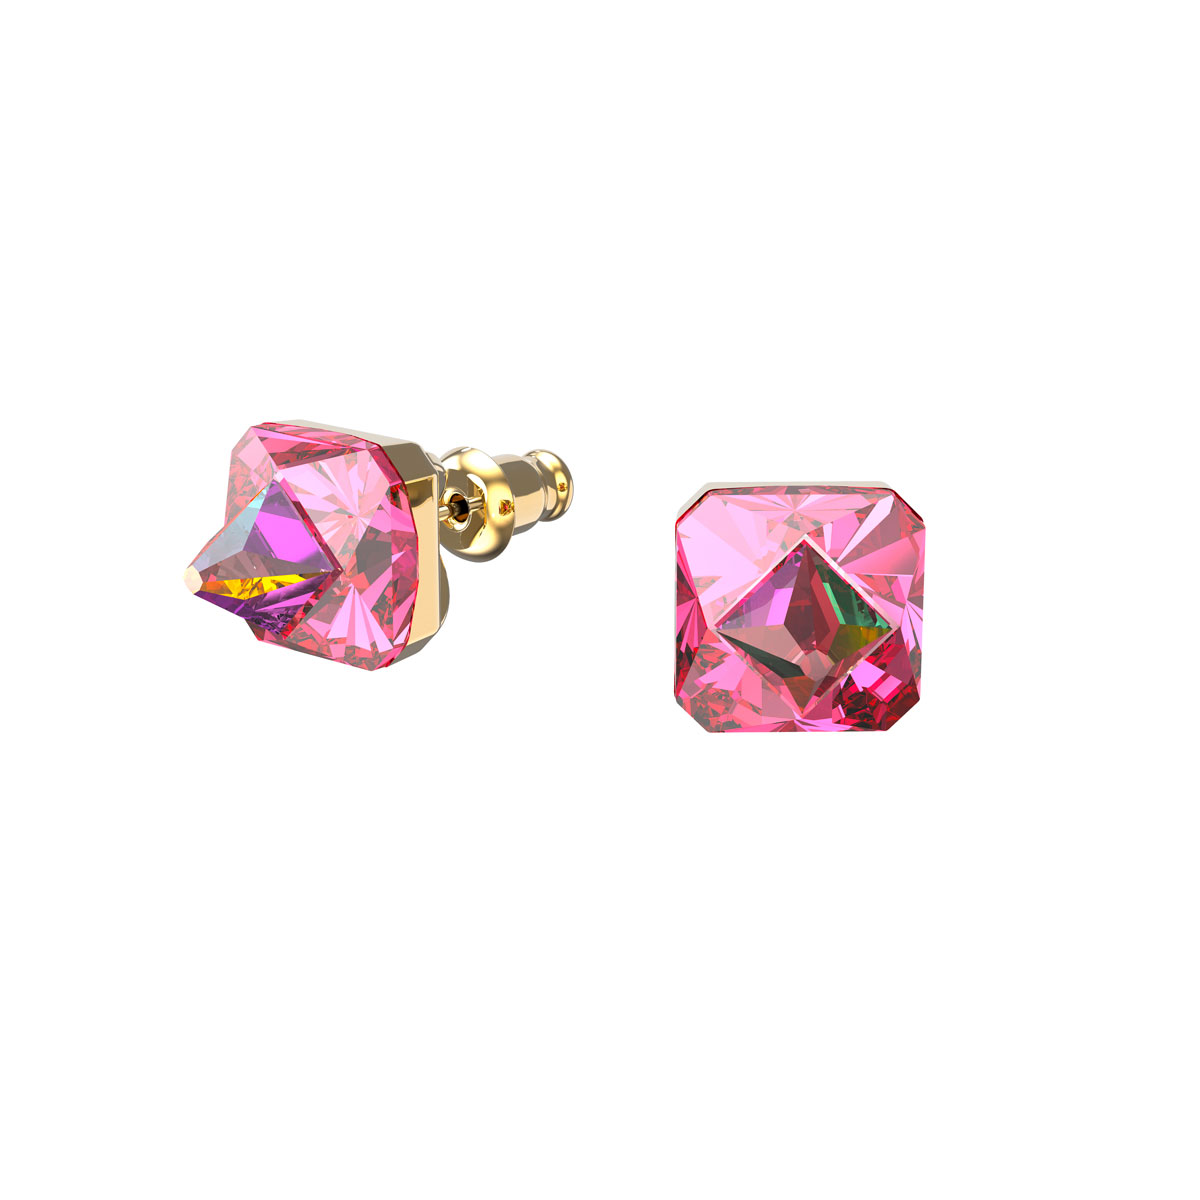 Swarovski Chroma Stud Earrings, Pyramid Cut Crystals, Pink, Gold-Tone Plated